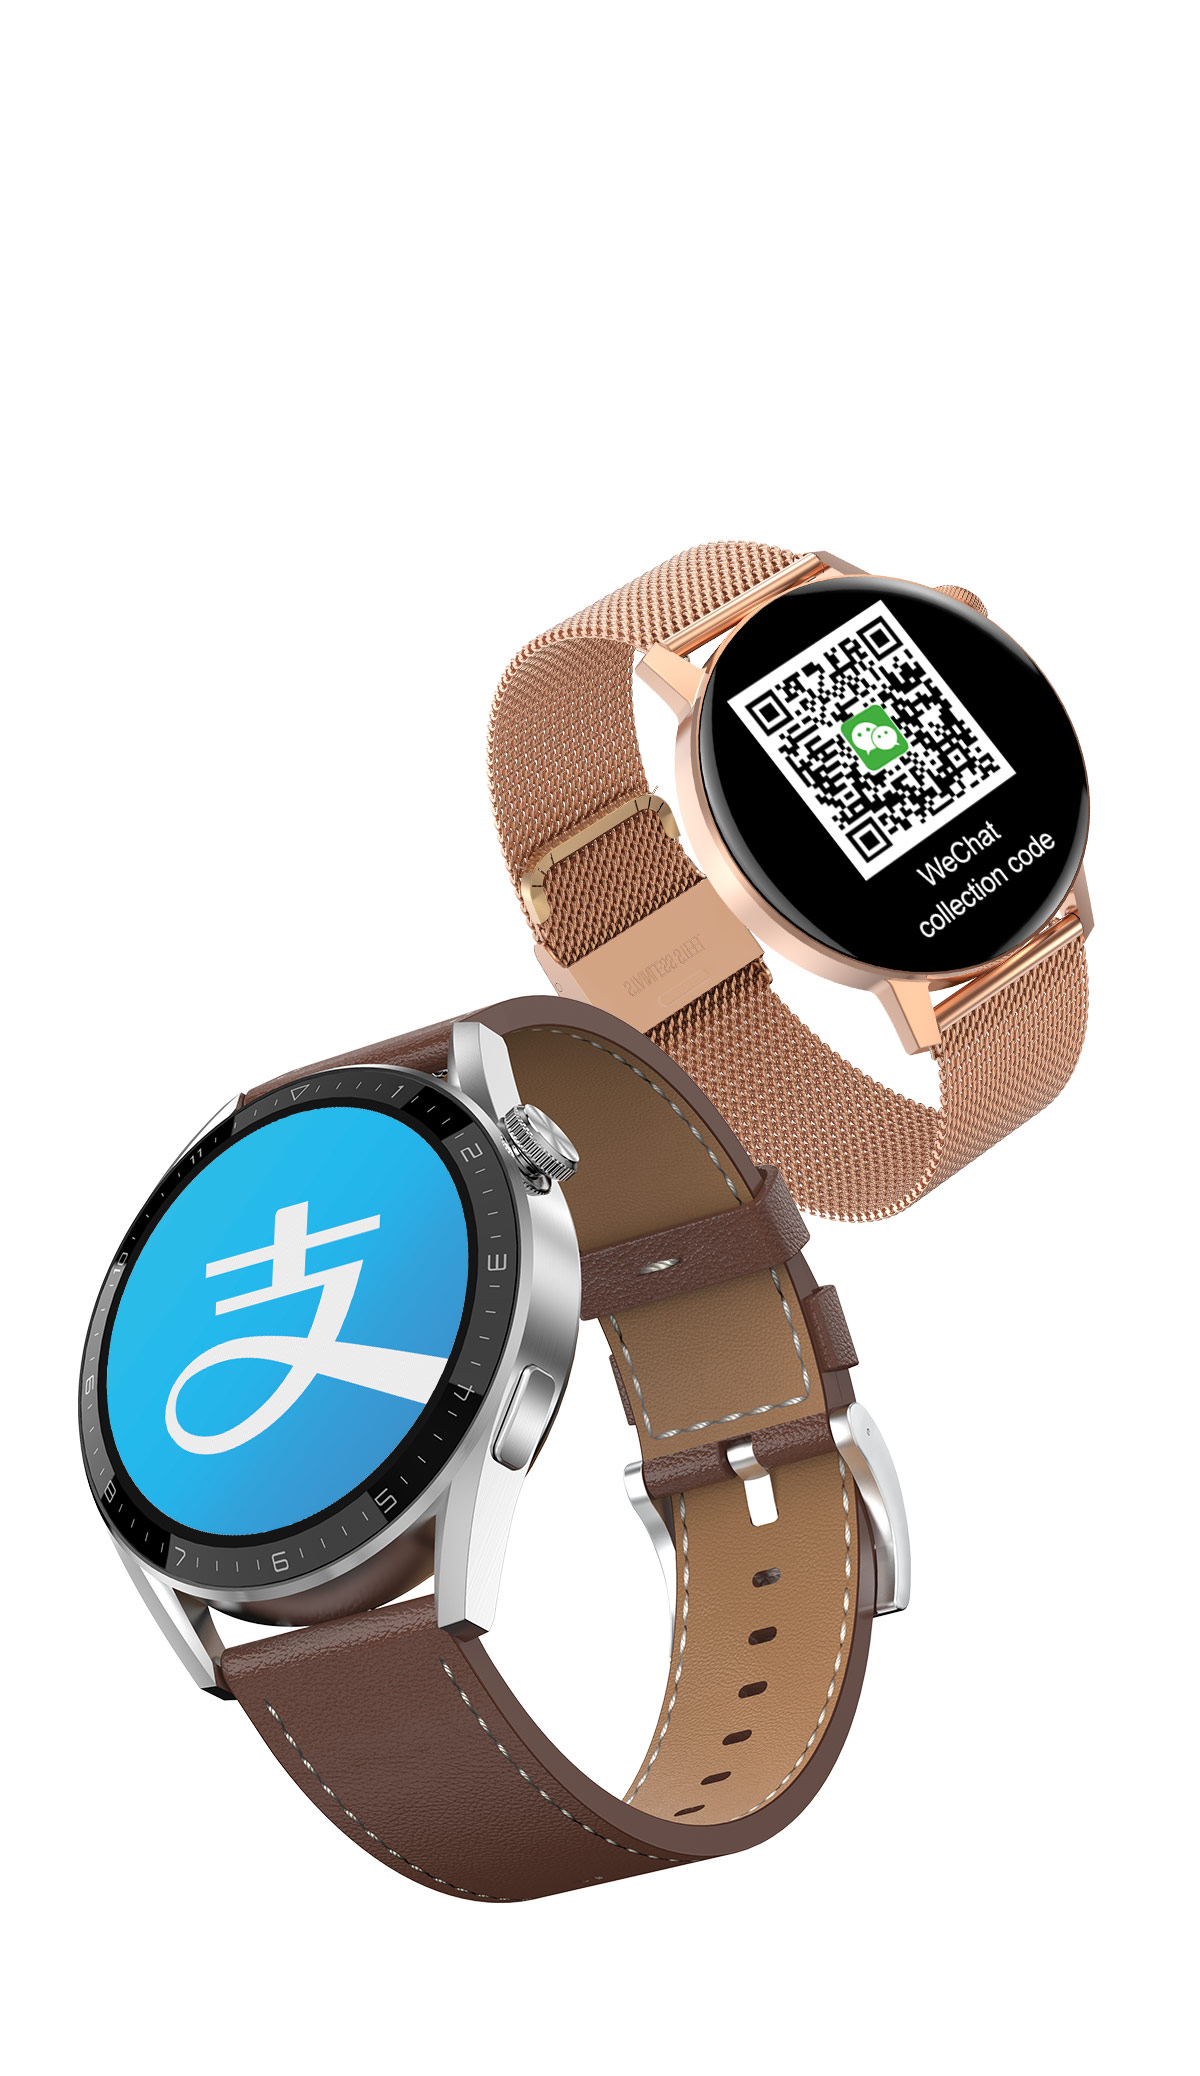 Smartwatch DT3 Max Mini